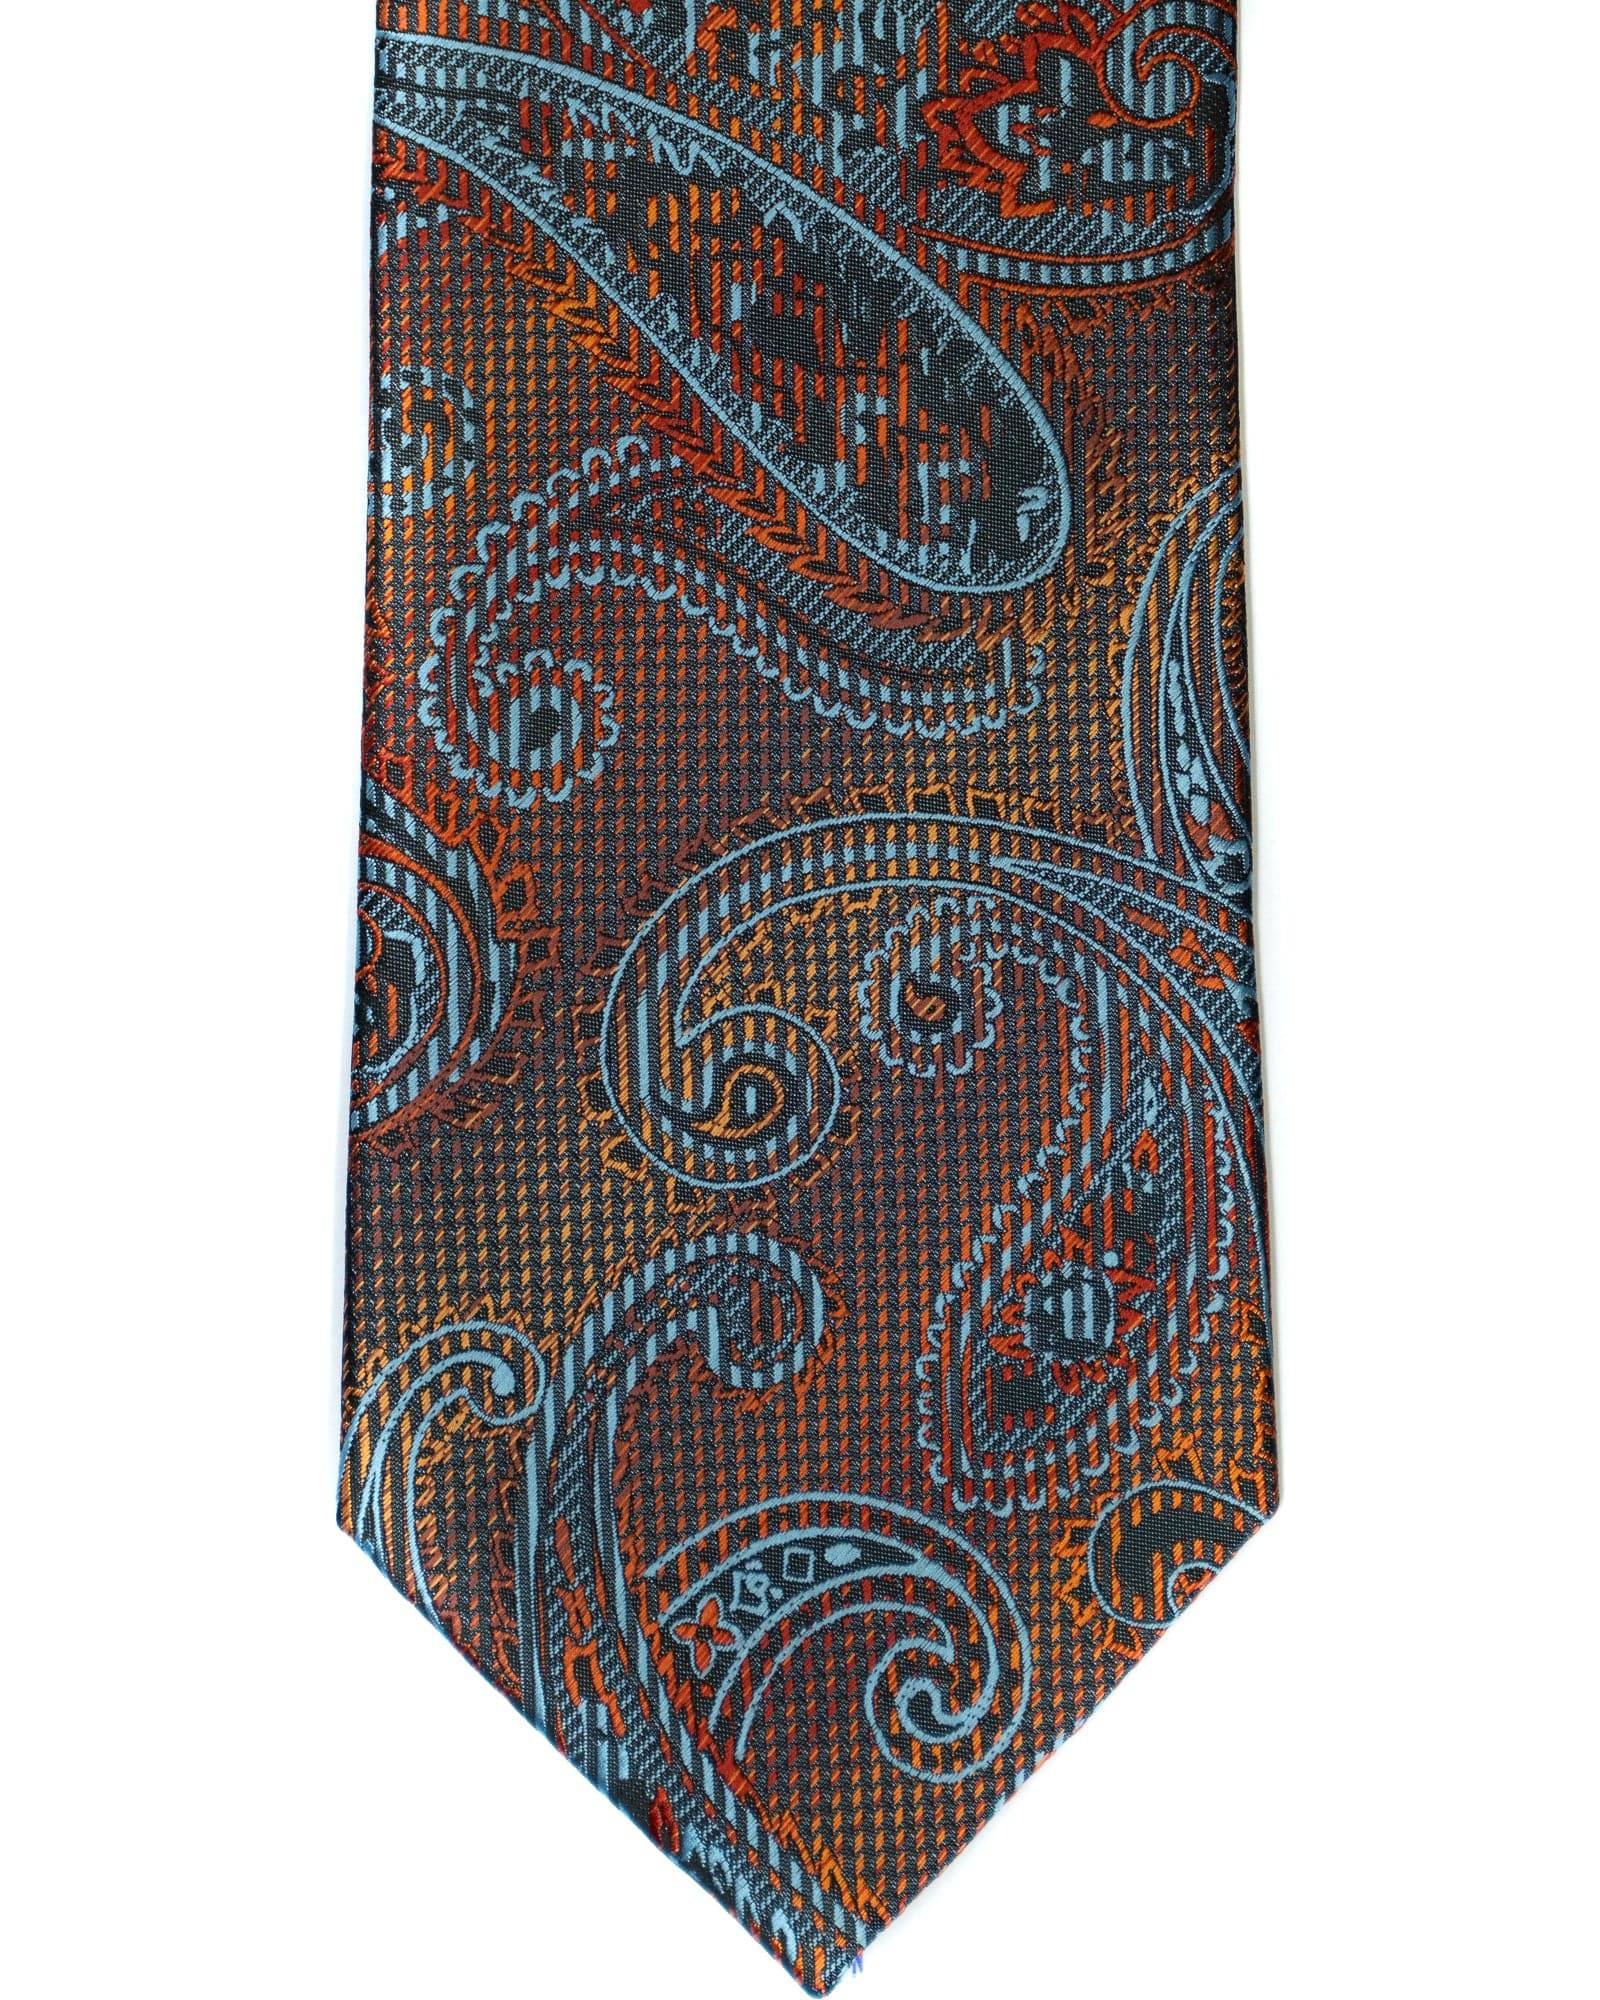 Venturi Uomo Paisley Tiny Check Tie in Rust with Blue - Rainwater's Men's Clothing and Tuxedo Rental